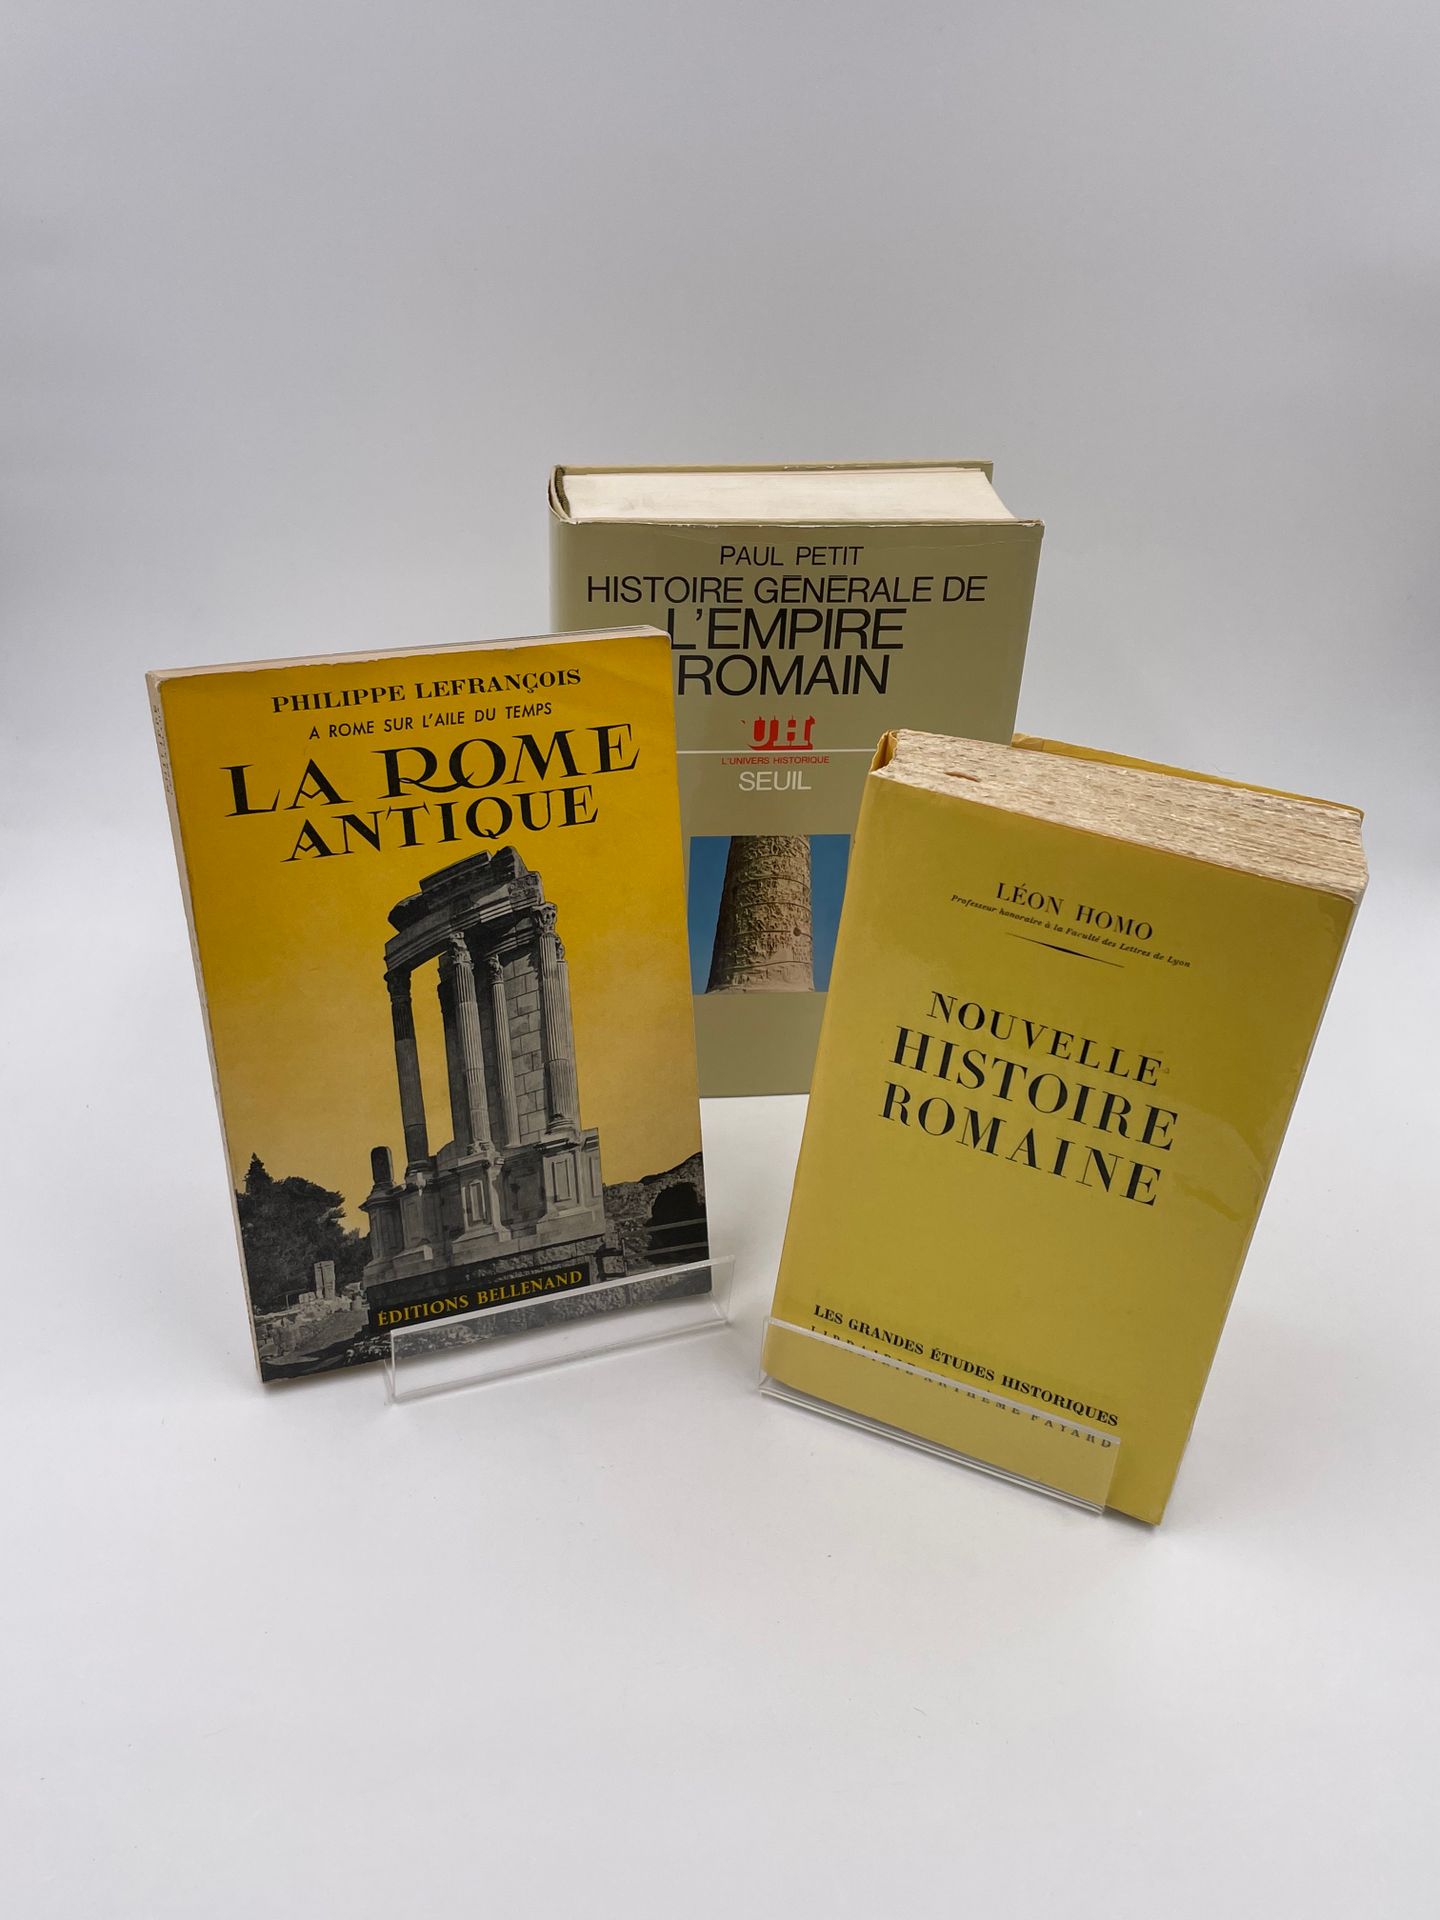 Null 3 volumi: 

- NUOVA STORIA ROMANA", Léon Homo, Les grandes études historiqu&hellip;